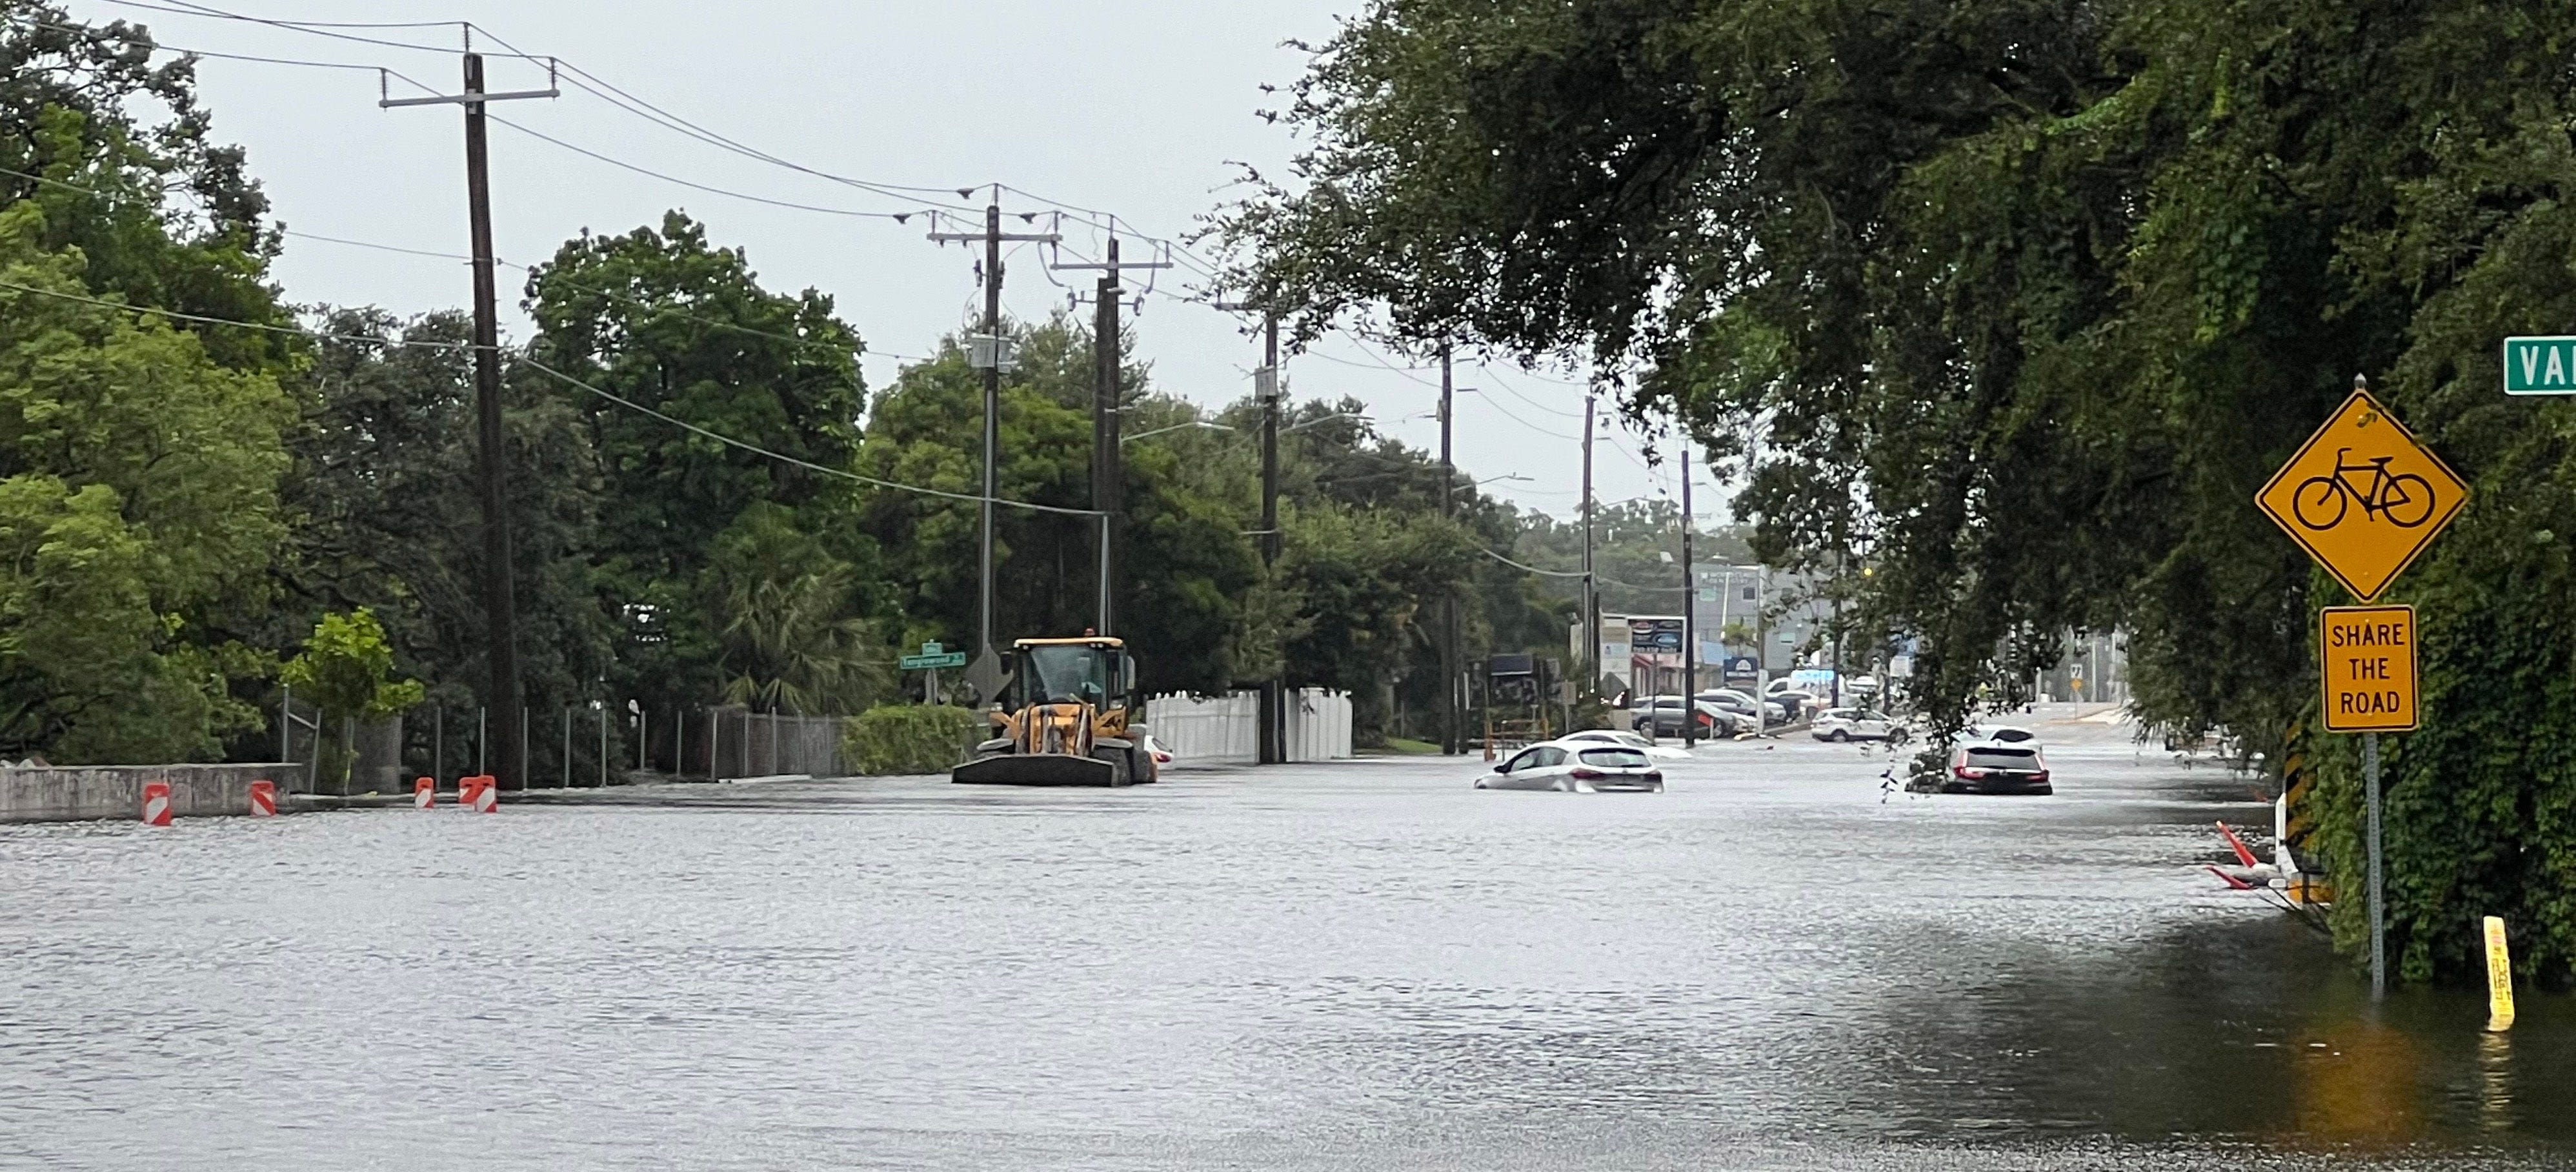 Jacksonville's flood risks grow into Tuesday as Debby sends area more rain overnight